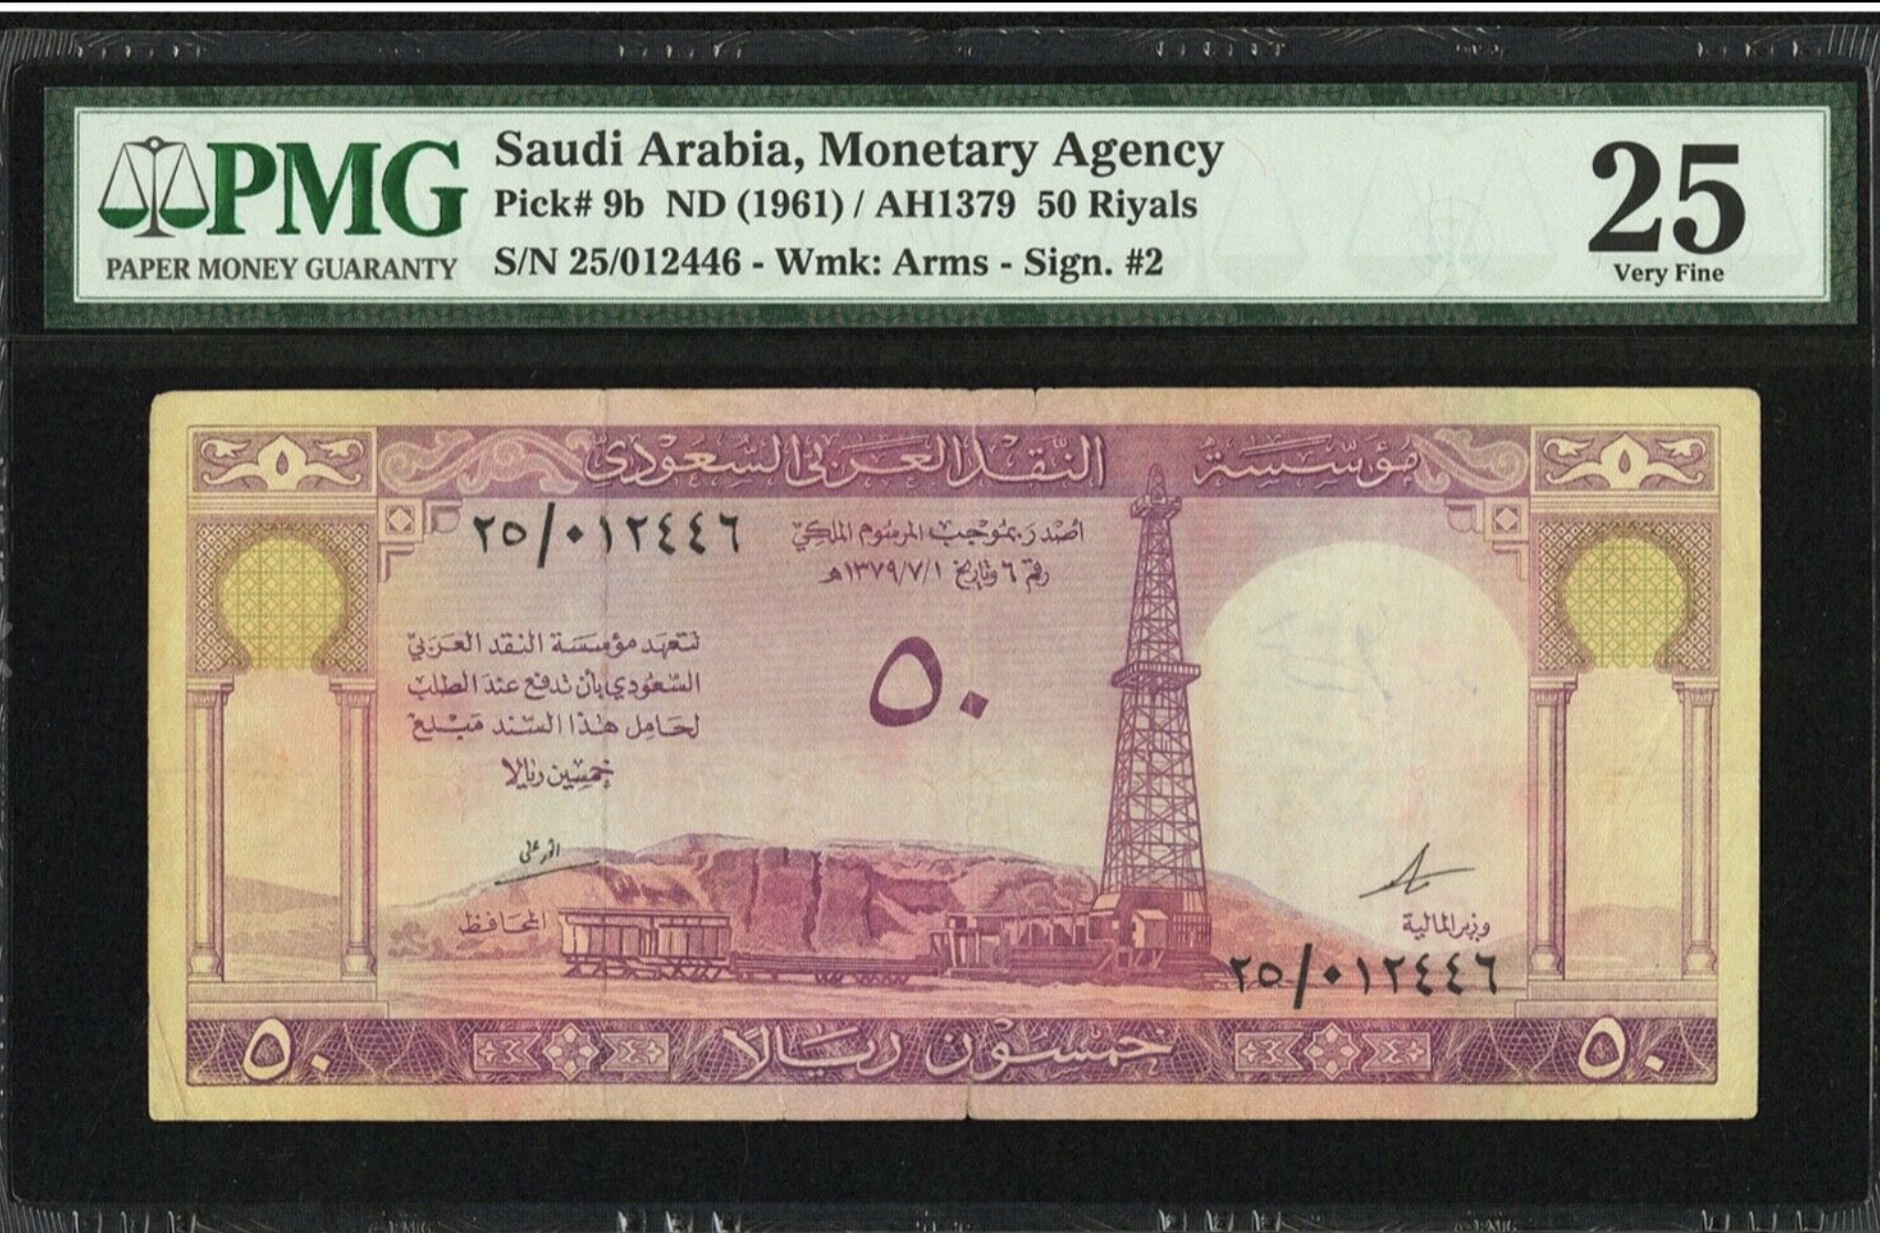 1379 AH 1961 Saudi Arabia Monetary Agency 50 Riyals Pick 9b Banknote PMG 25 VF